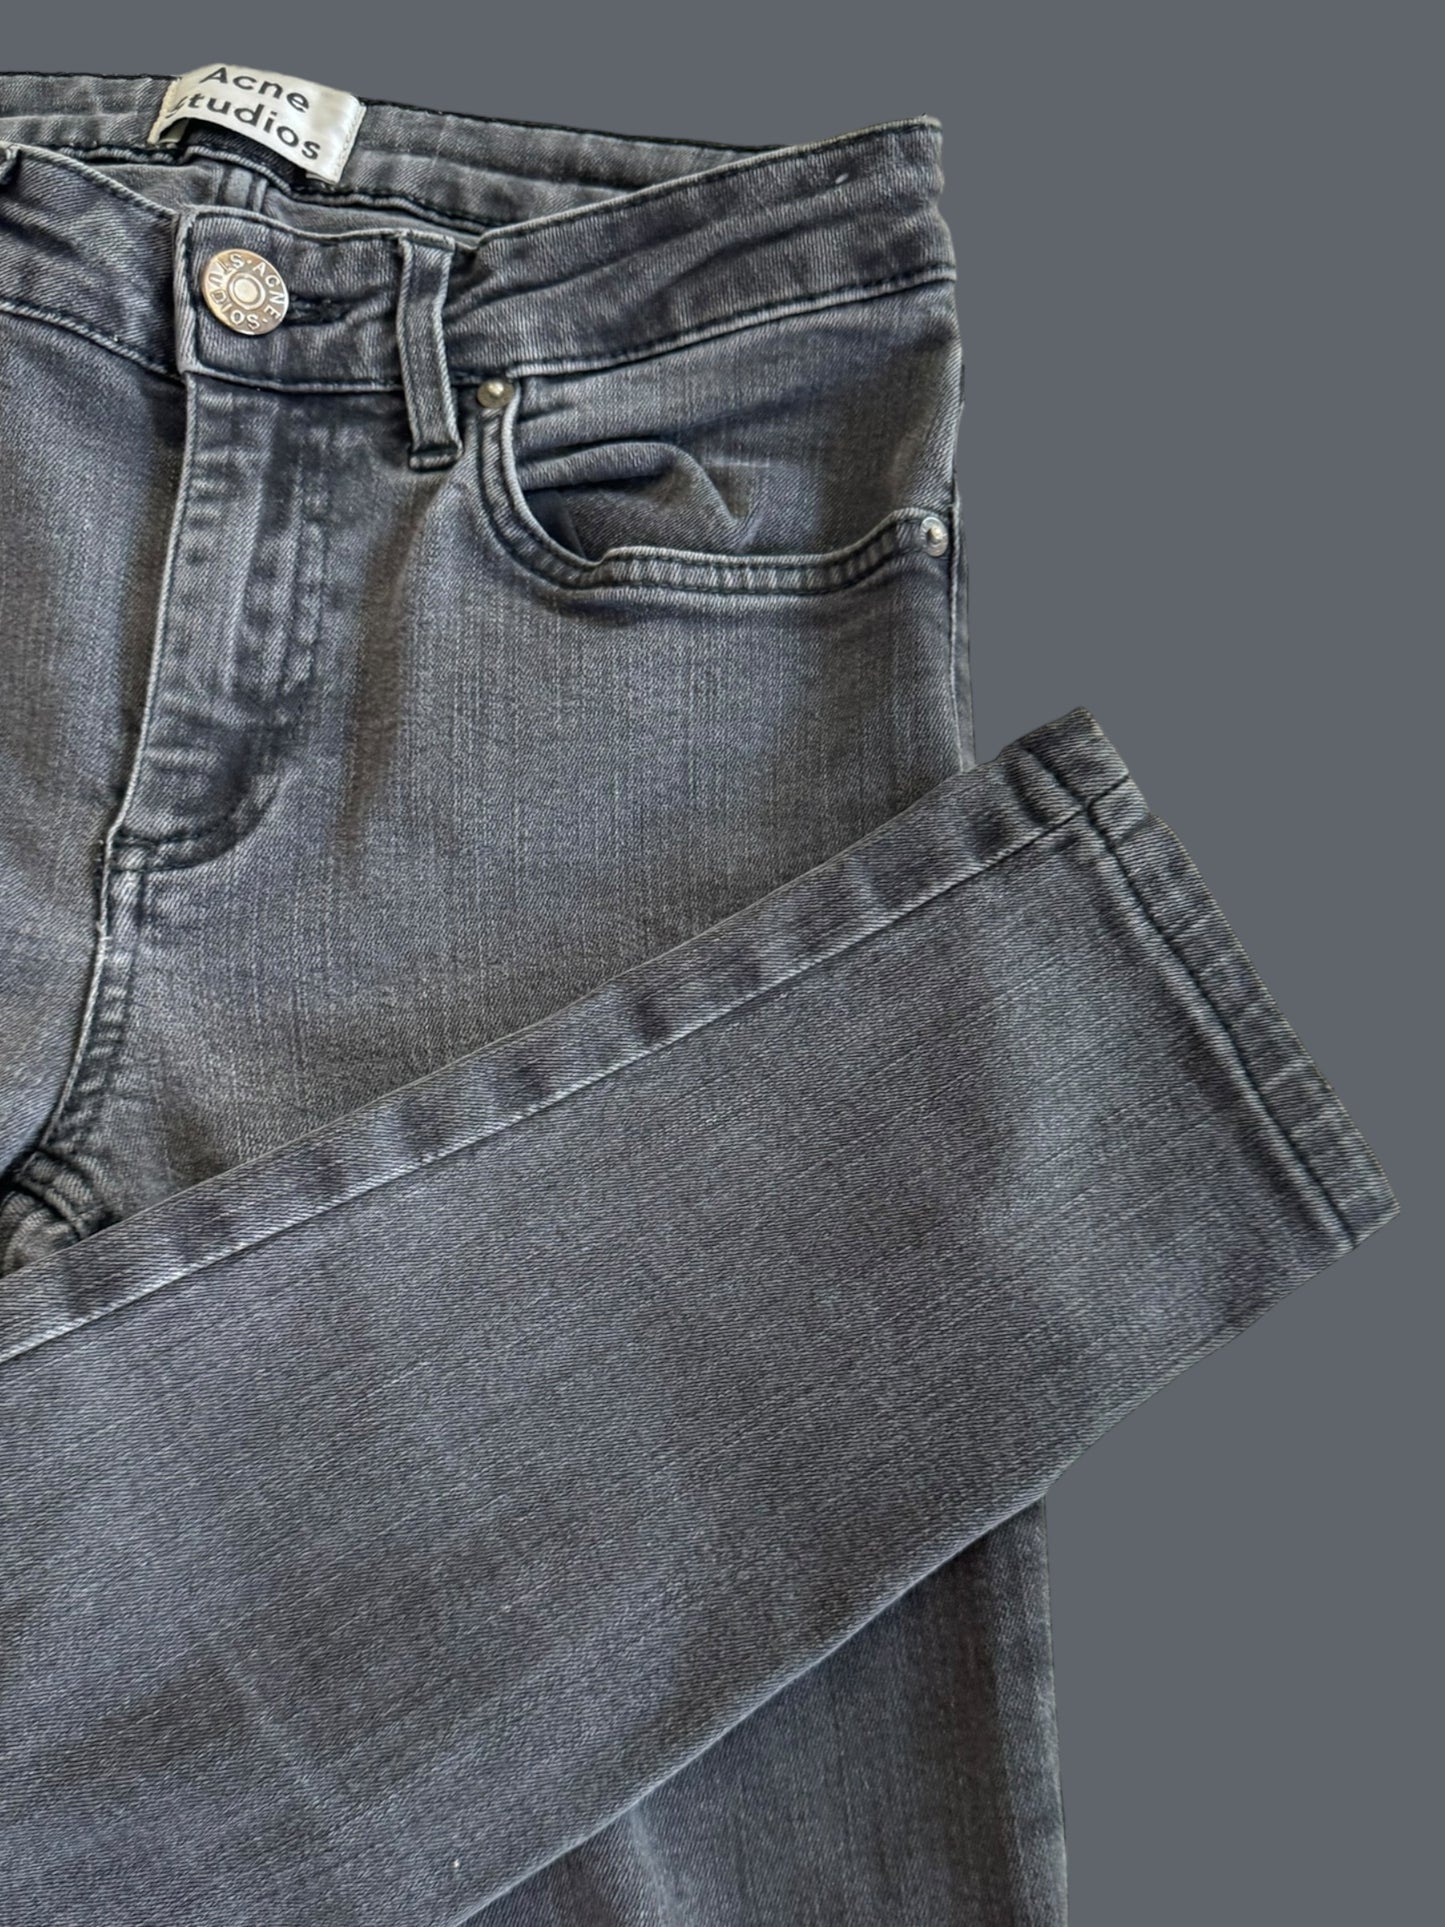 ACNE STUDIOS grey jeans size 25